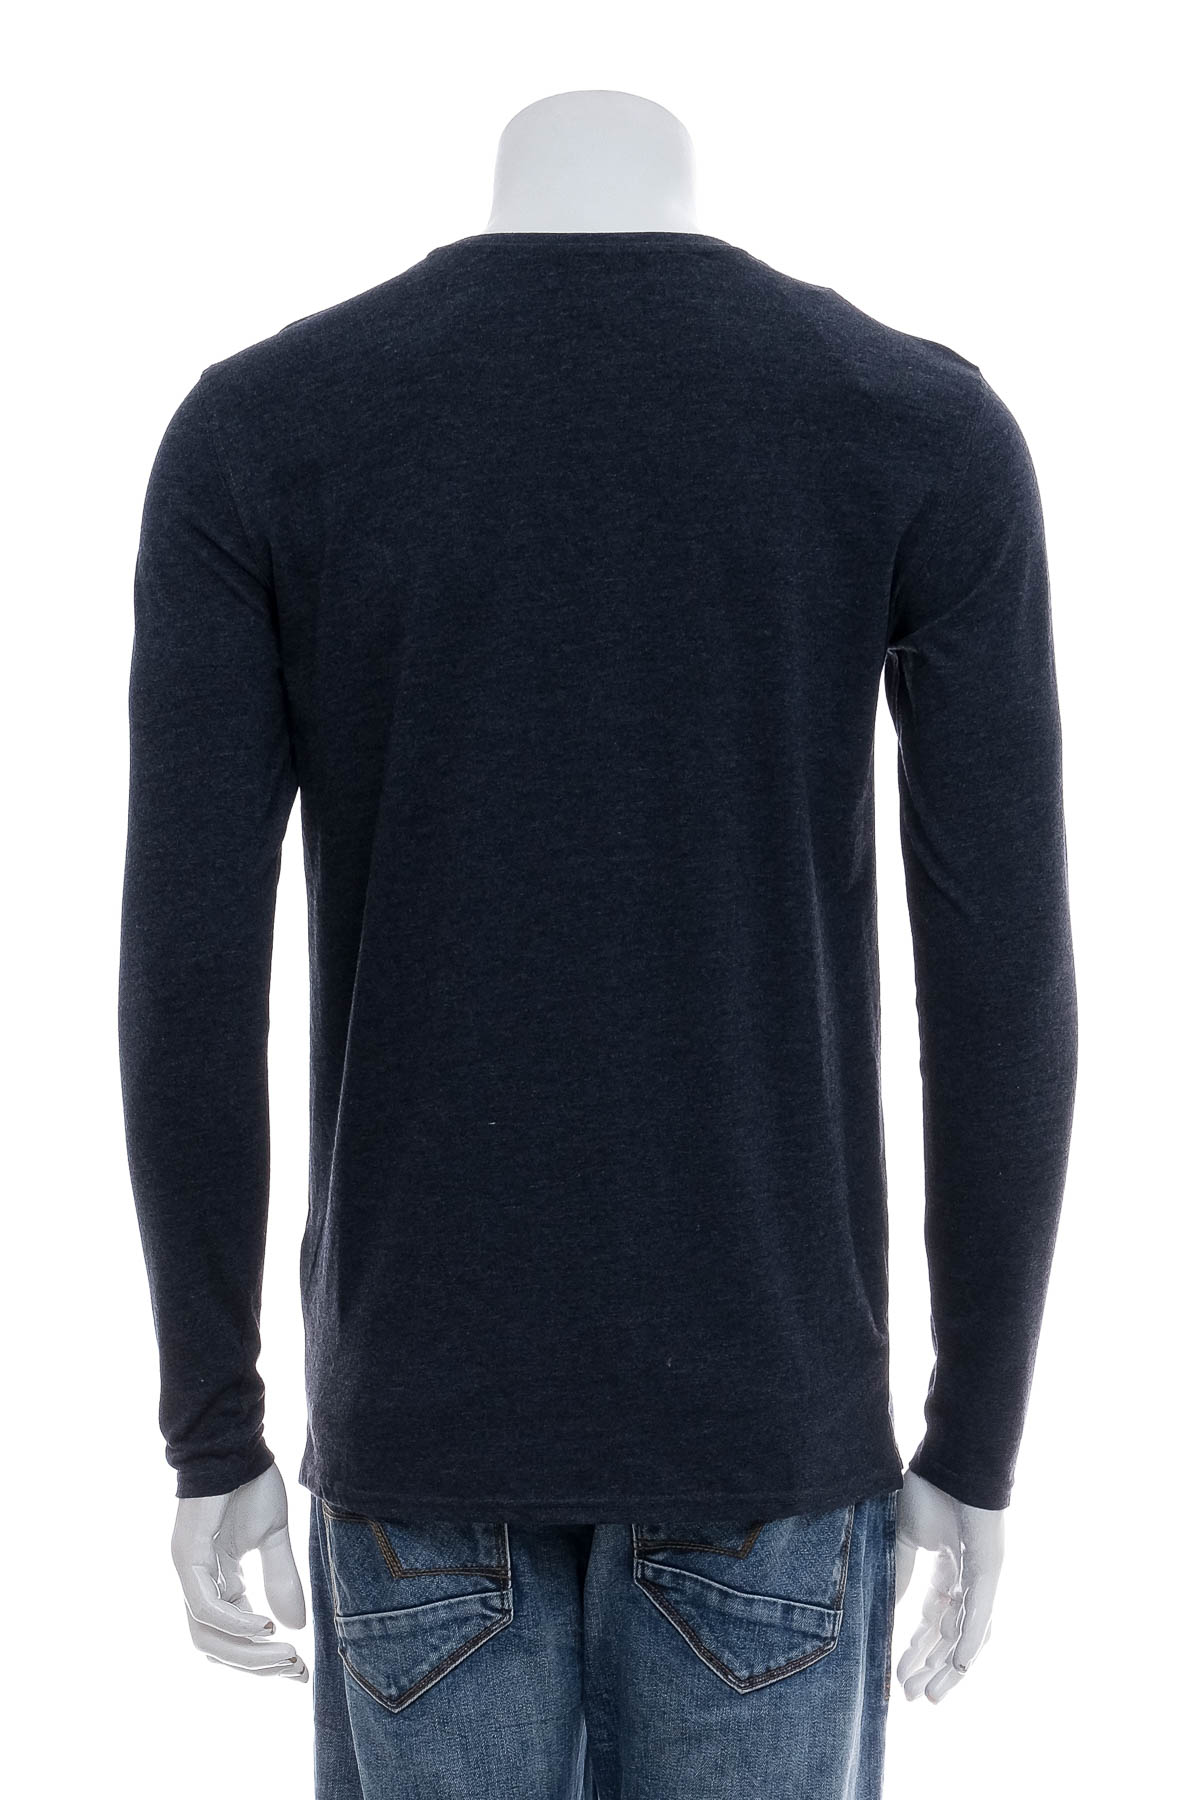 Men's sweater - Jean Pascale - 1